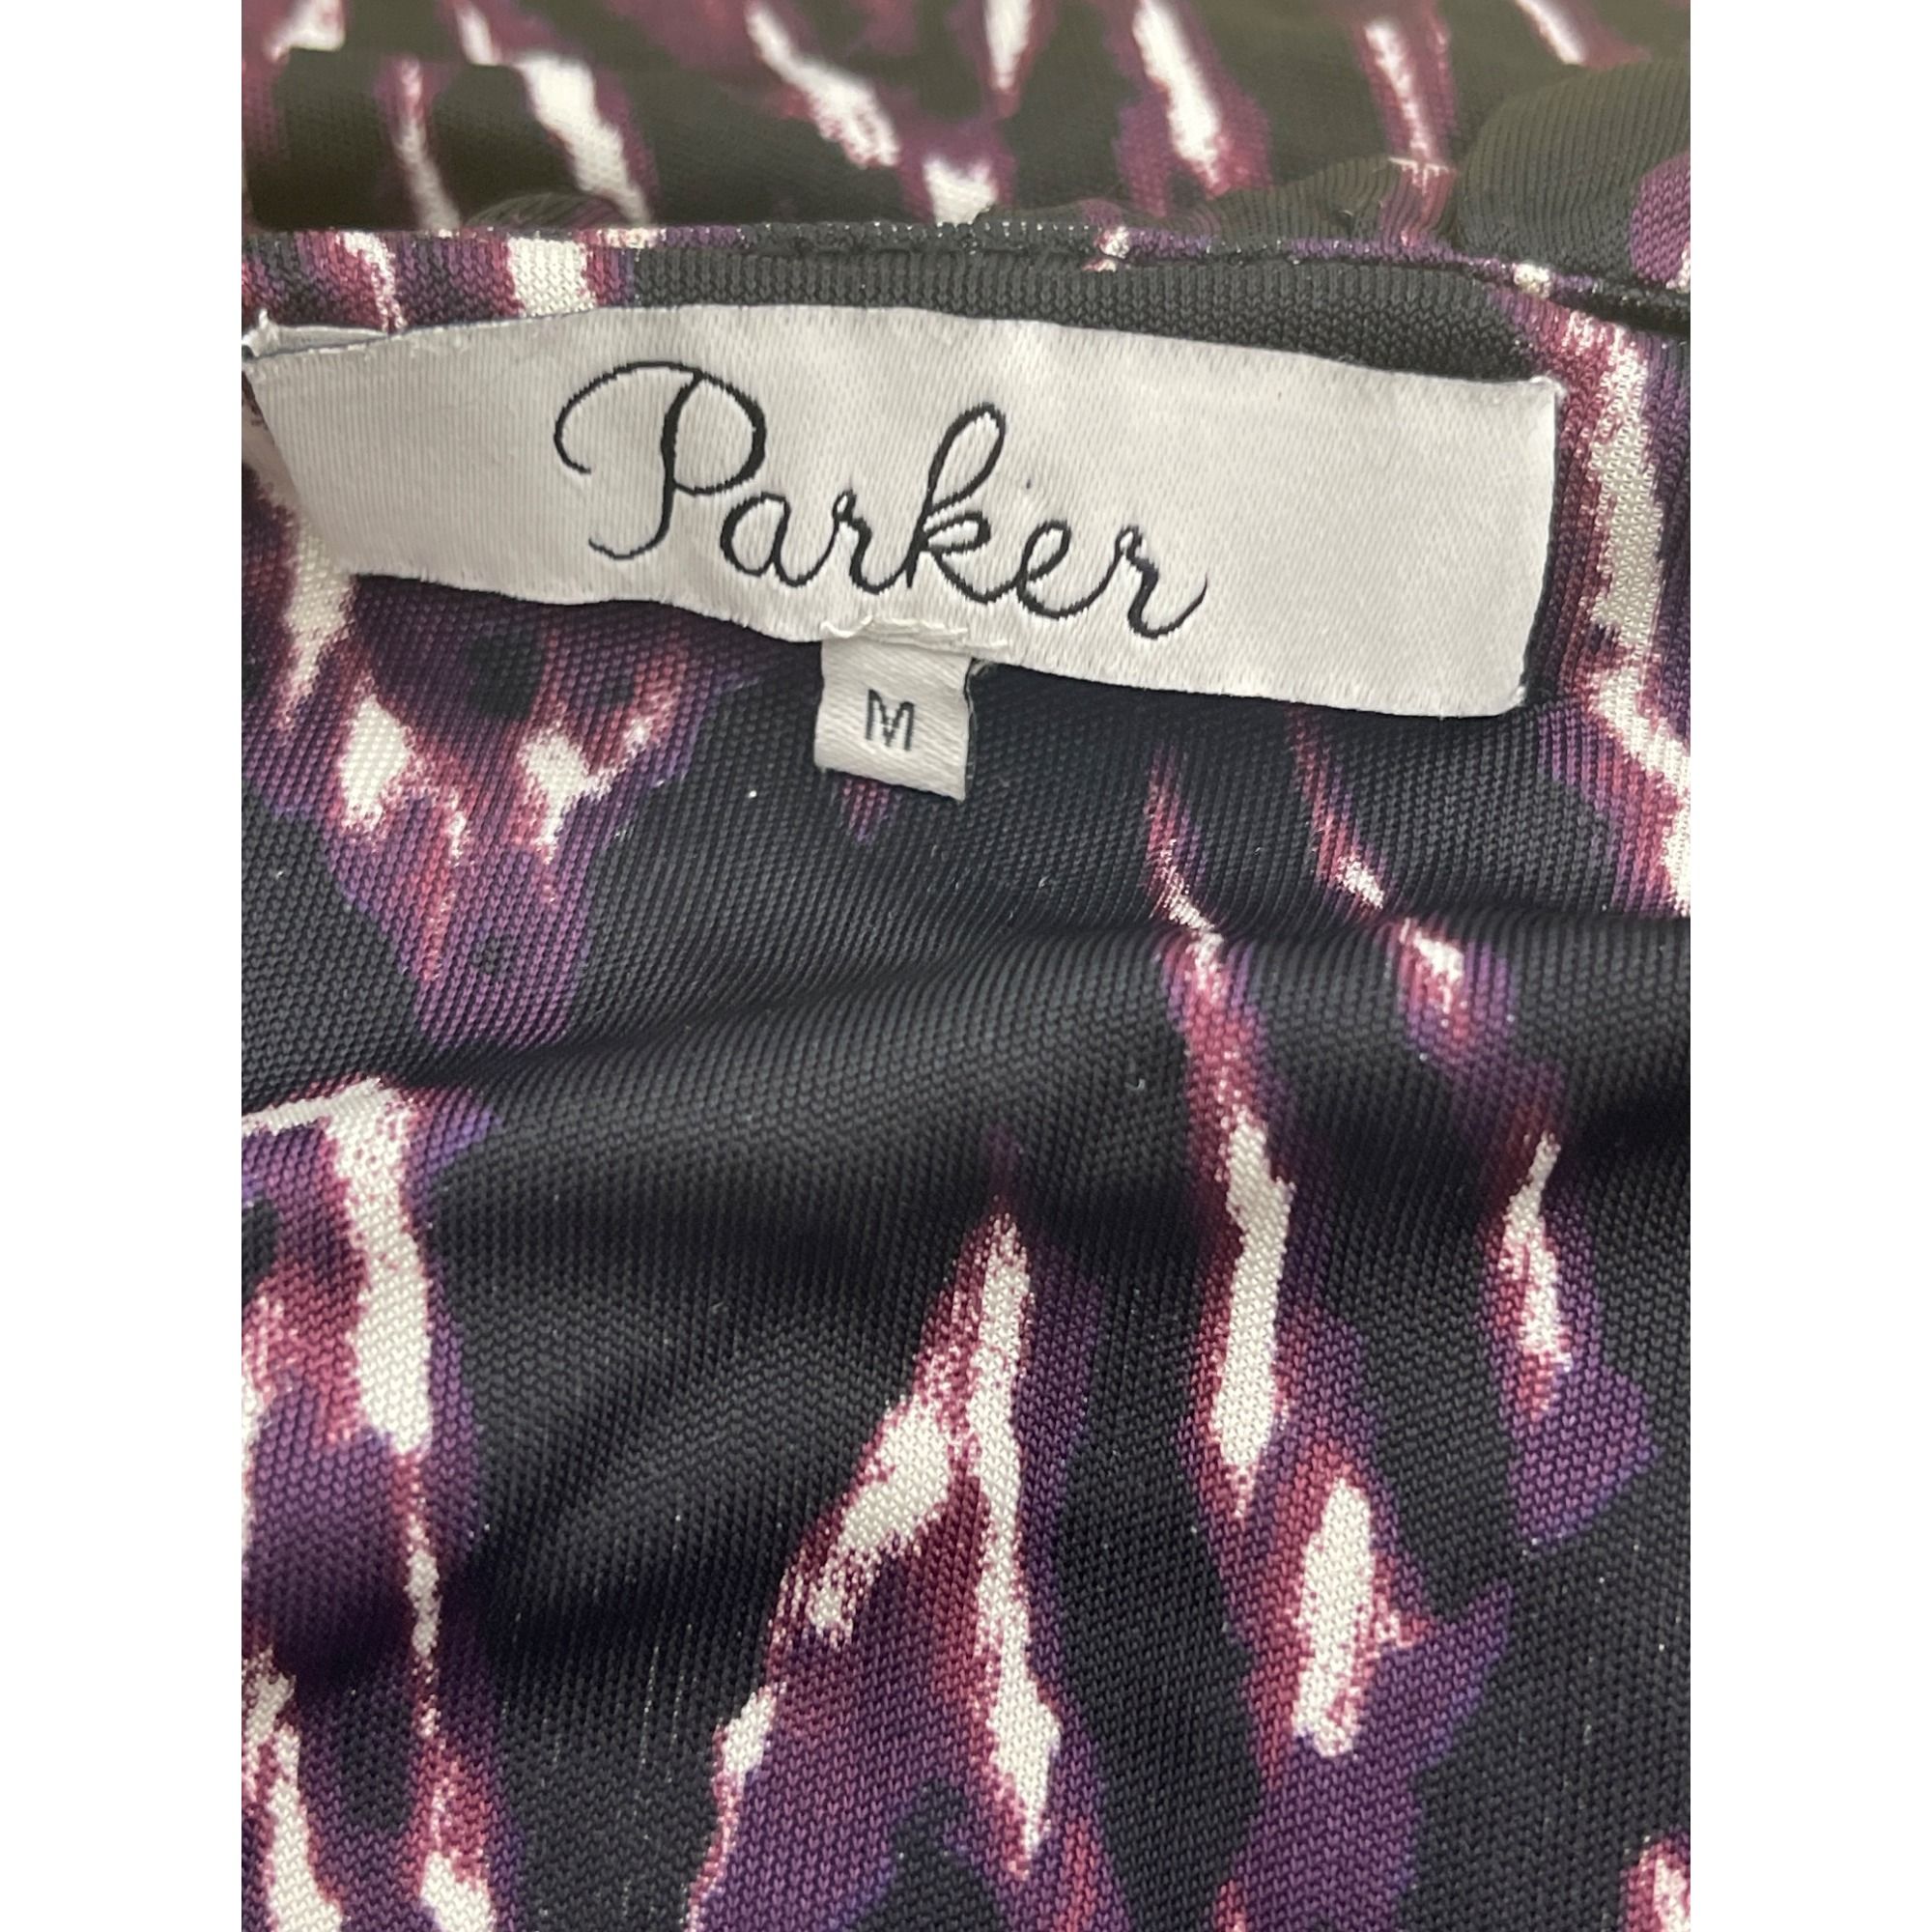 Parker Parker Multicolored V Neck Batwing Sleeve Shift Dress Size M Size M / US 6-8 / IT 42-44 - 8 Thumbnail